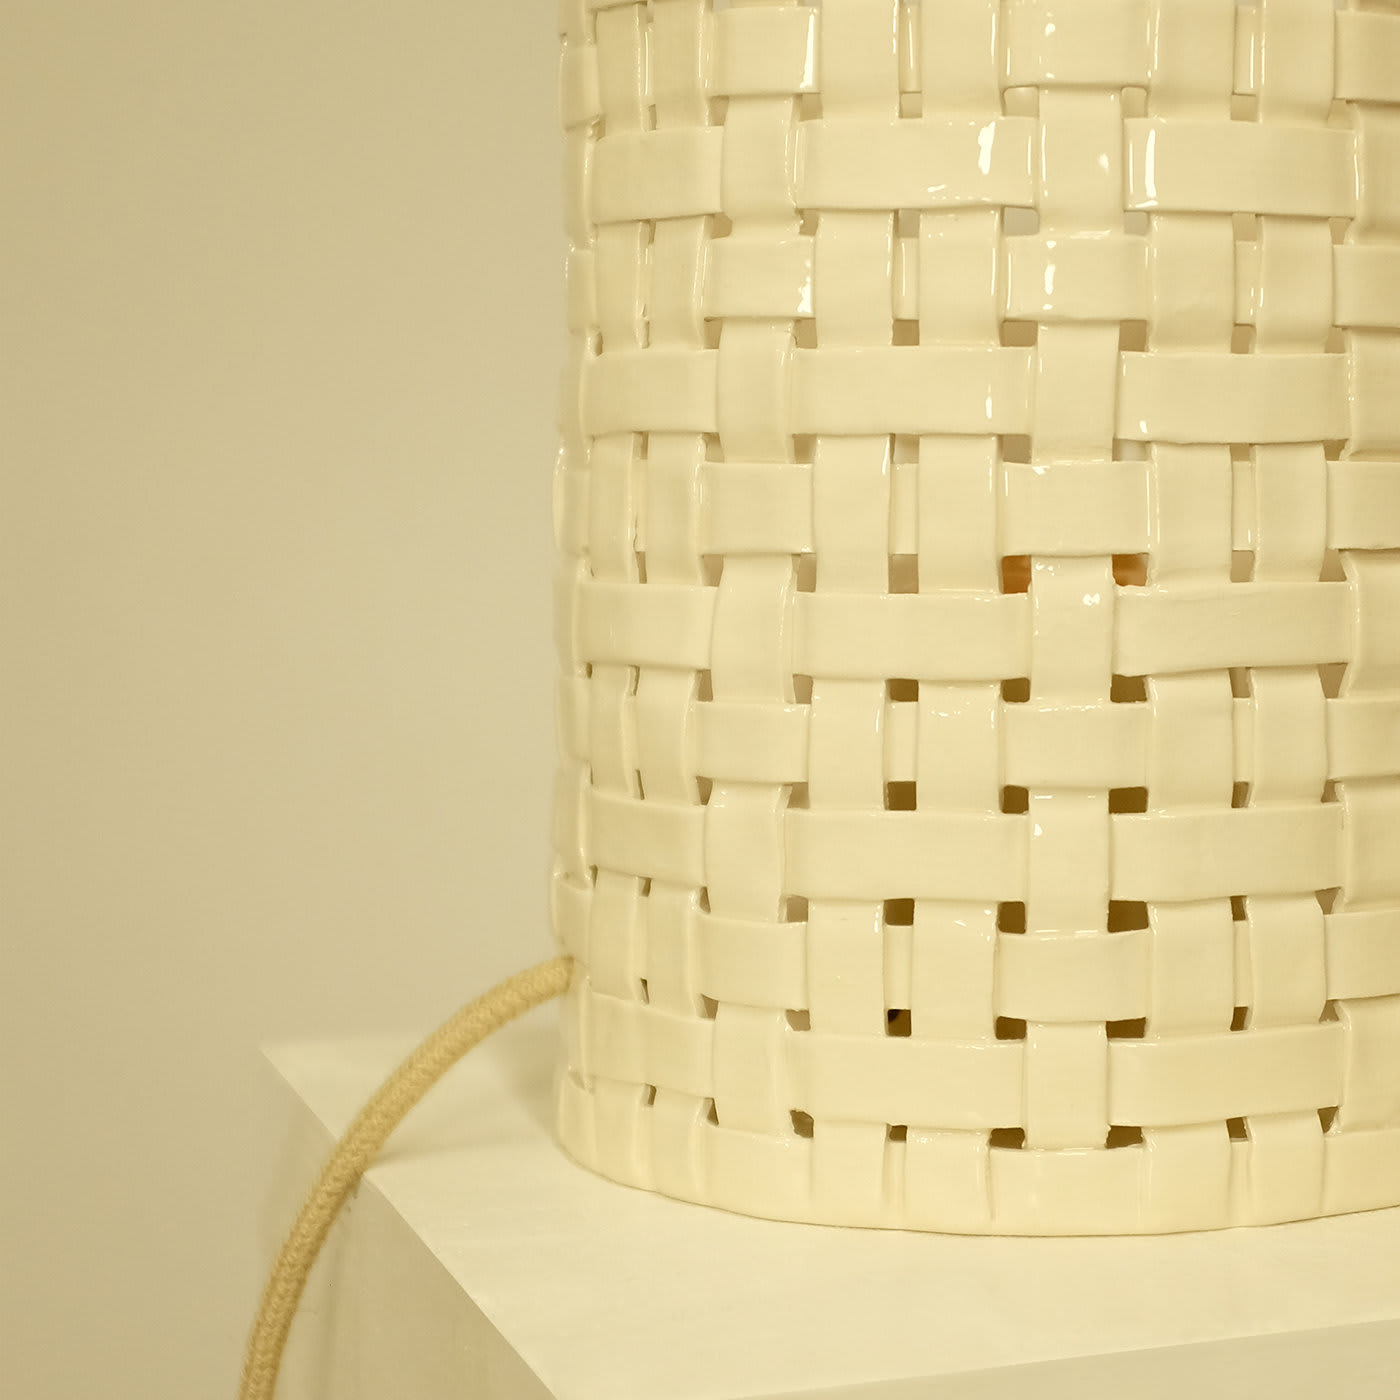 Cistella Table Lamp #2 - Marta Benet